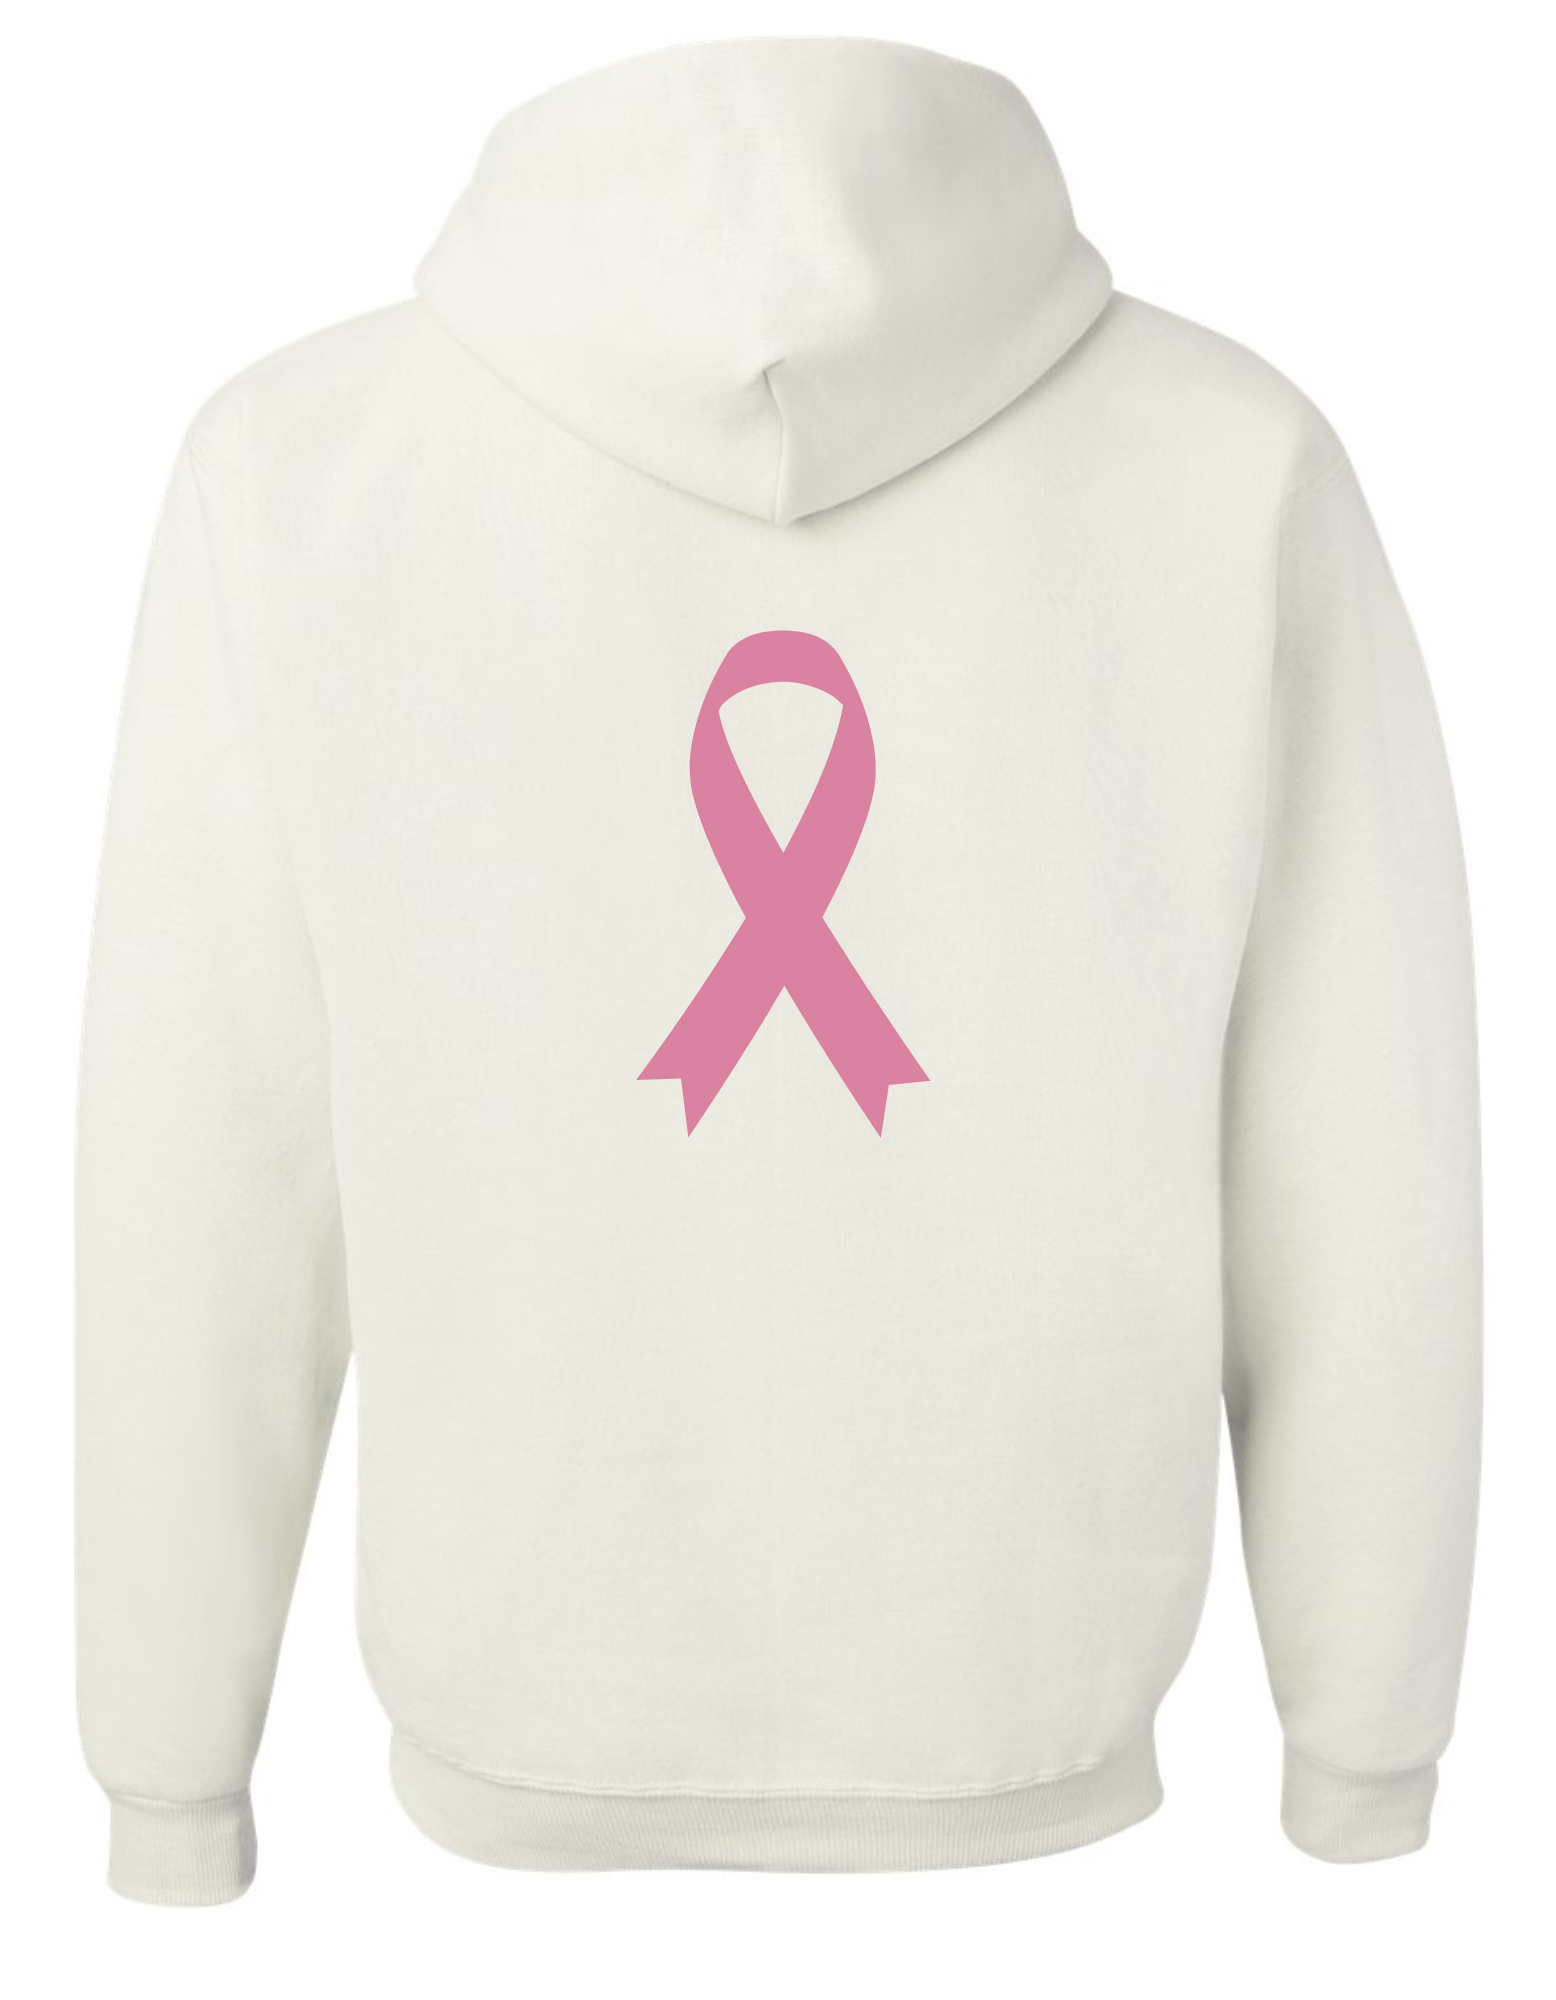 PINKTOBER Breast Cancer Awareness Inspirational White Hoodie